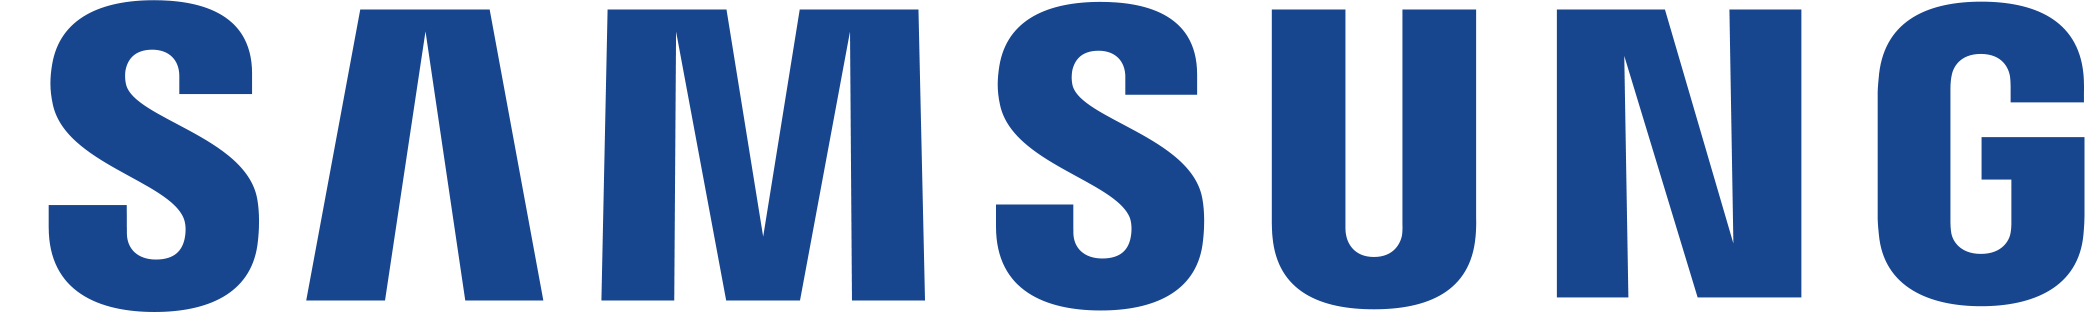 Samsung Logo PNG Image